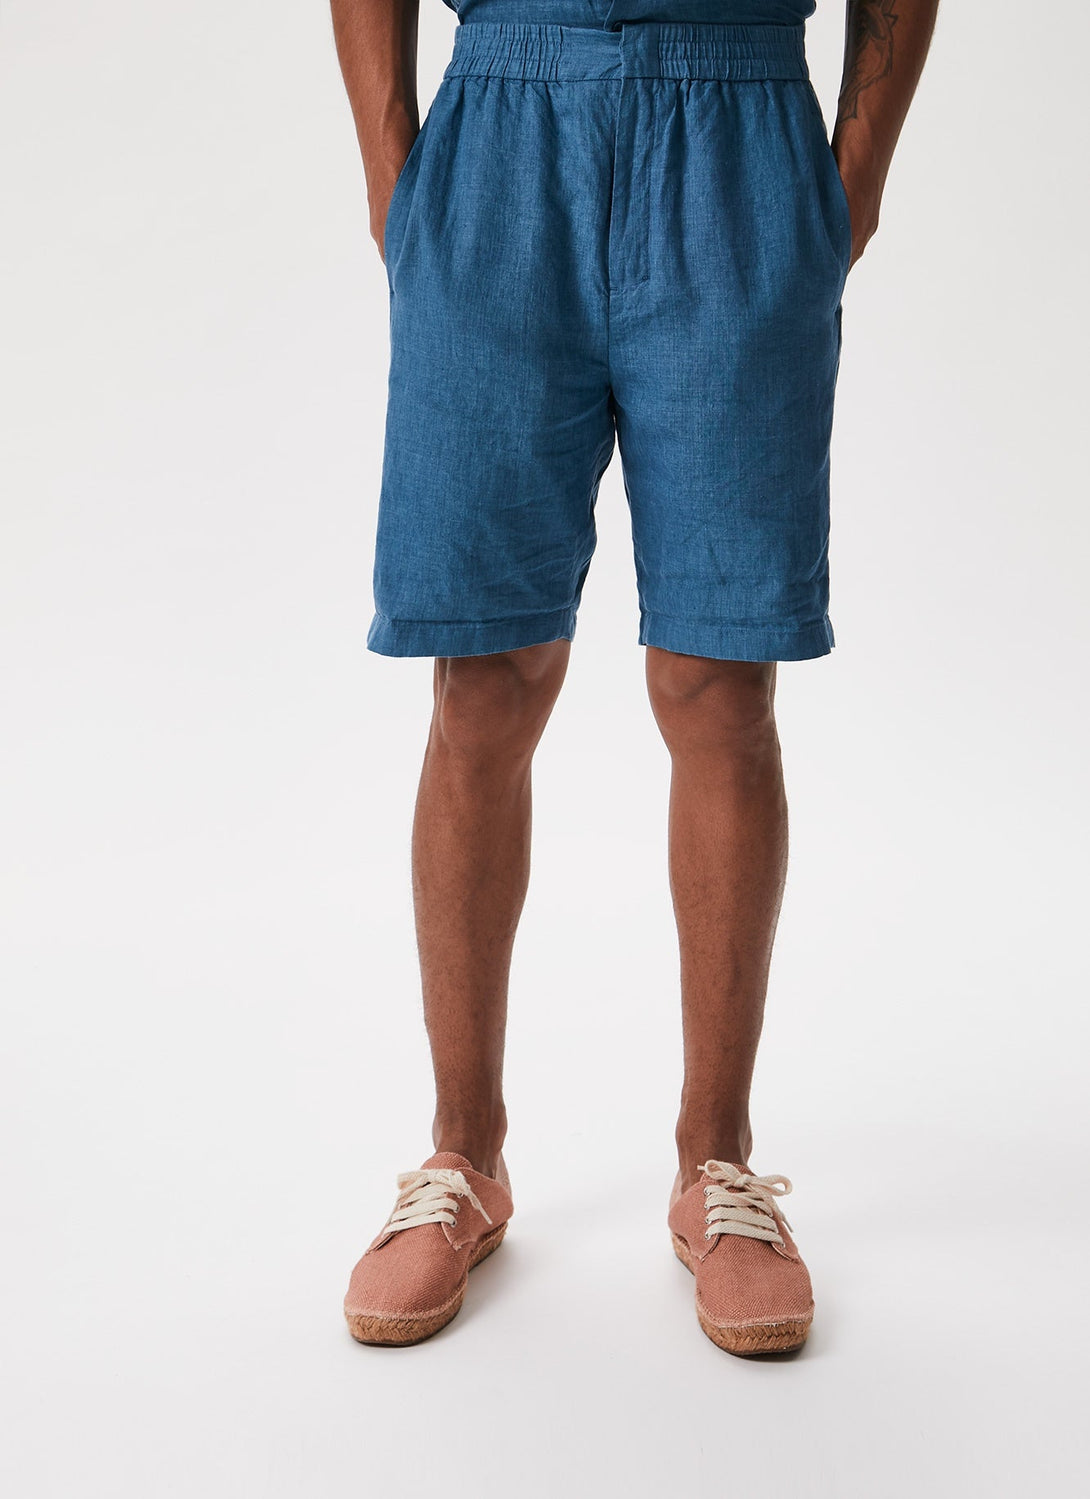 Men Shorts | Lagoon Short by Spanish designer Adolfo Dominguez